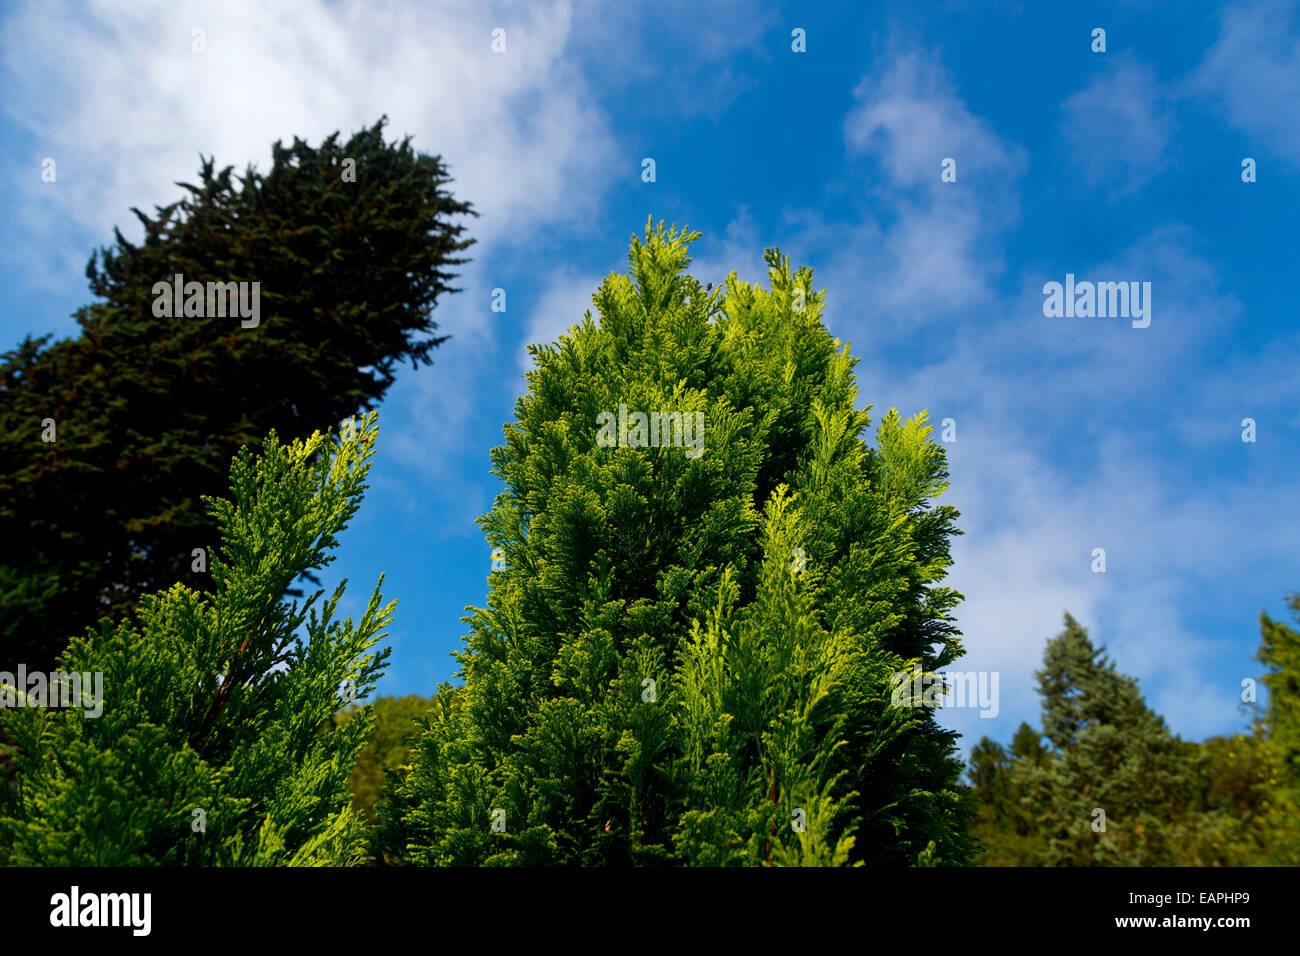 Leylandii or Leyland cypress or Cupressa leylandii, a fast growing coniferous evergreen tree with blue sky behind Stock Photo